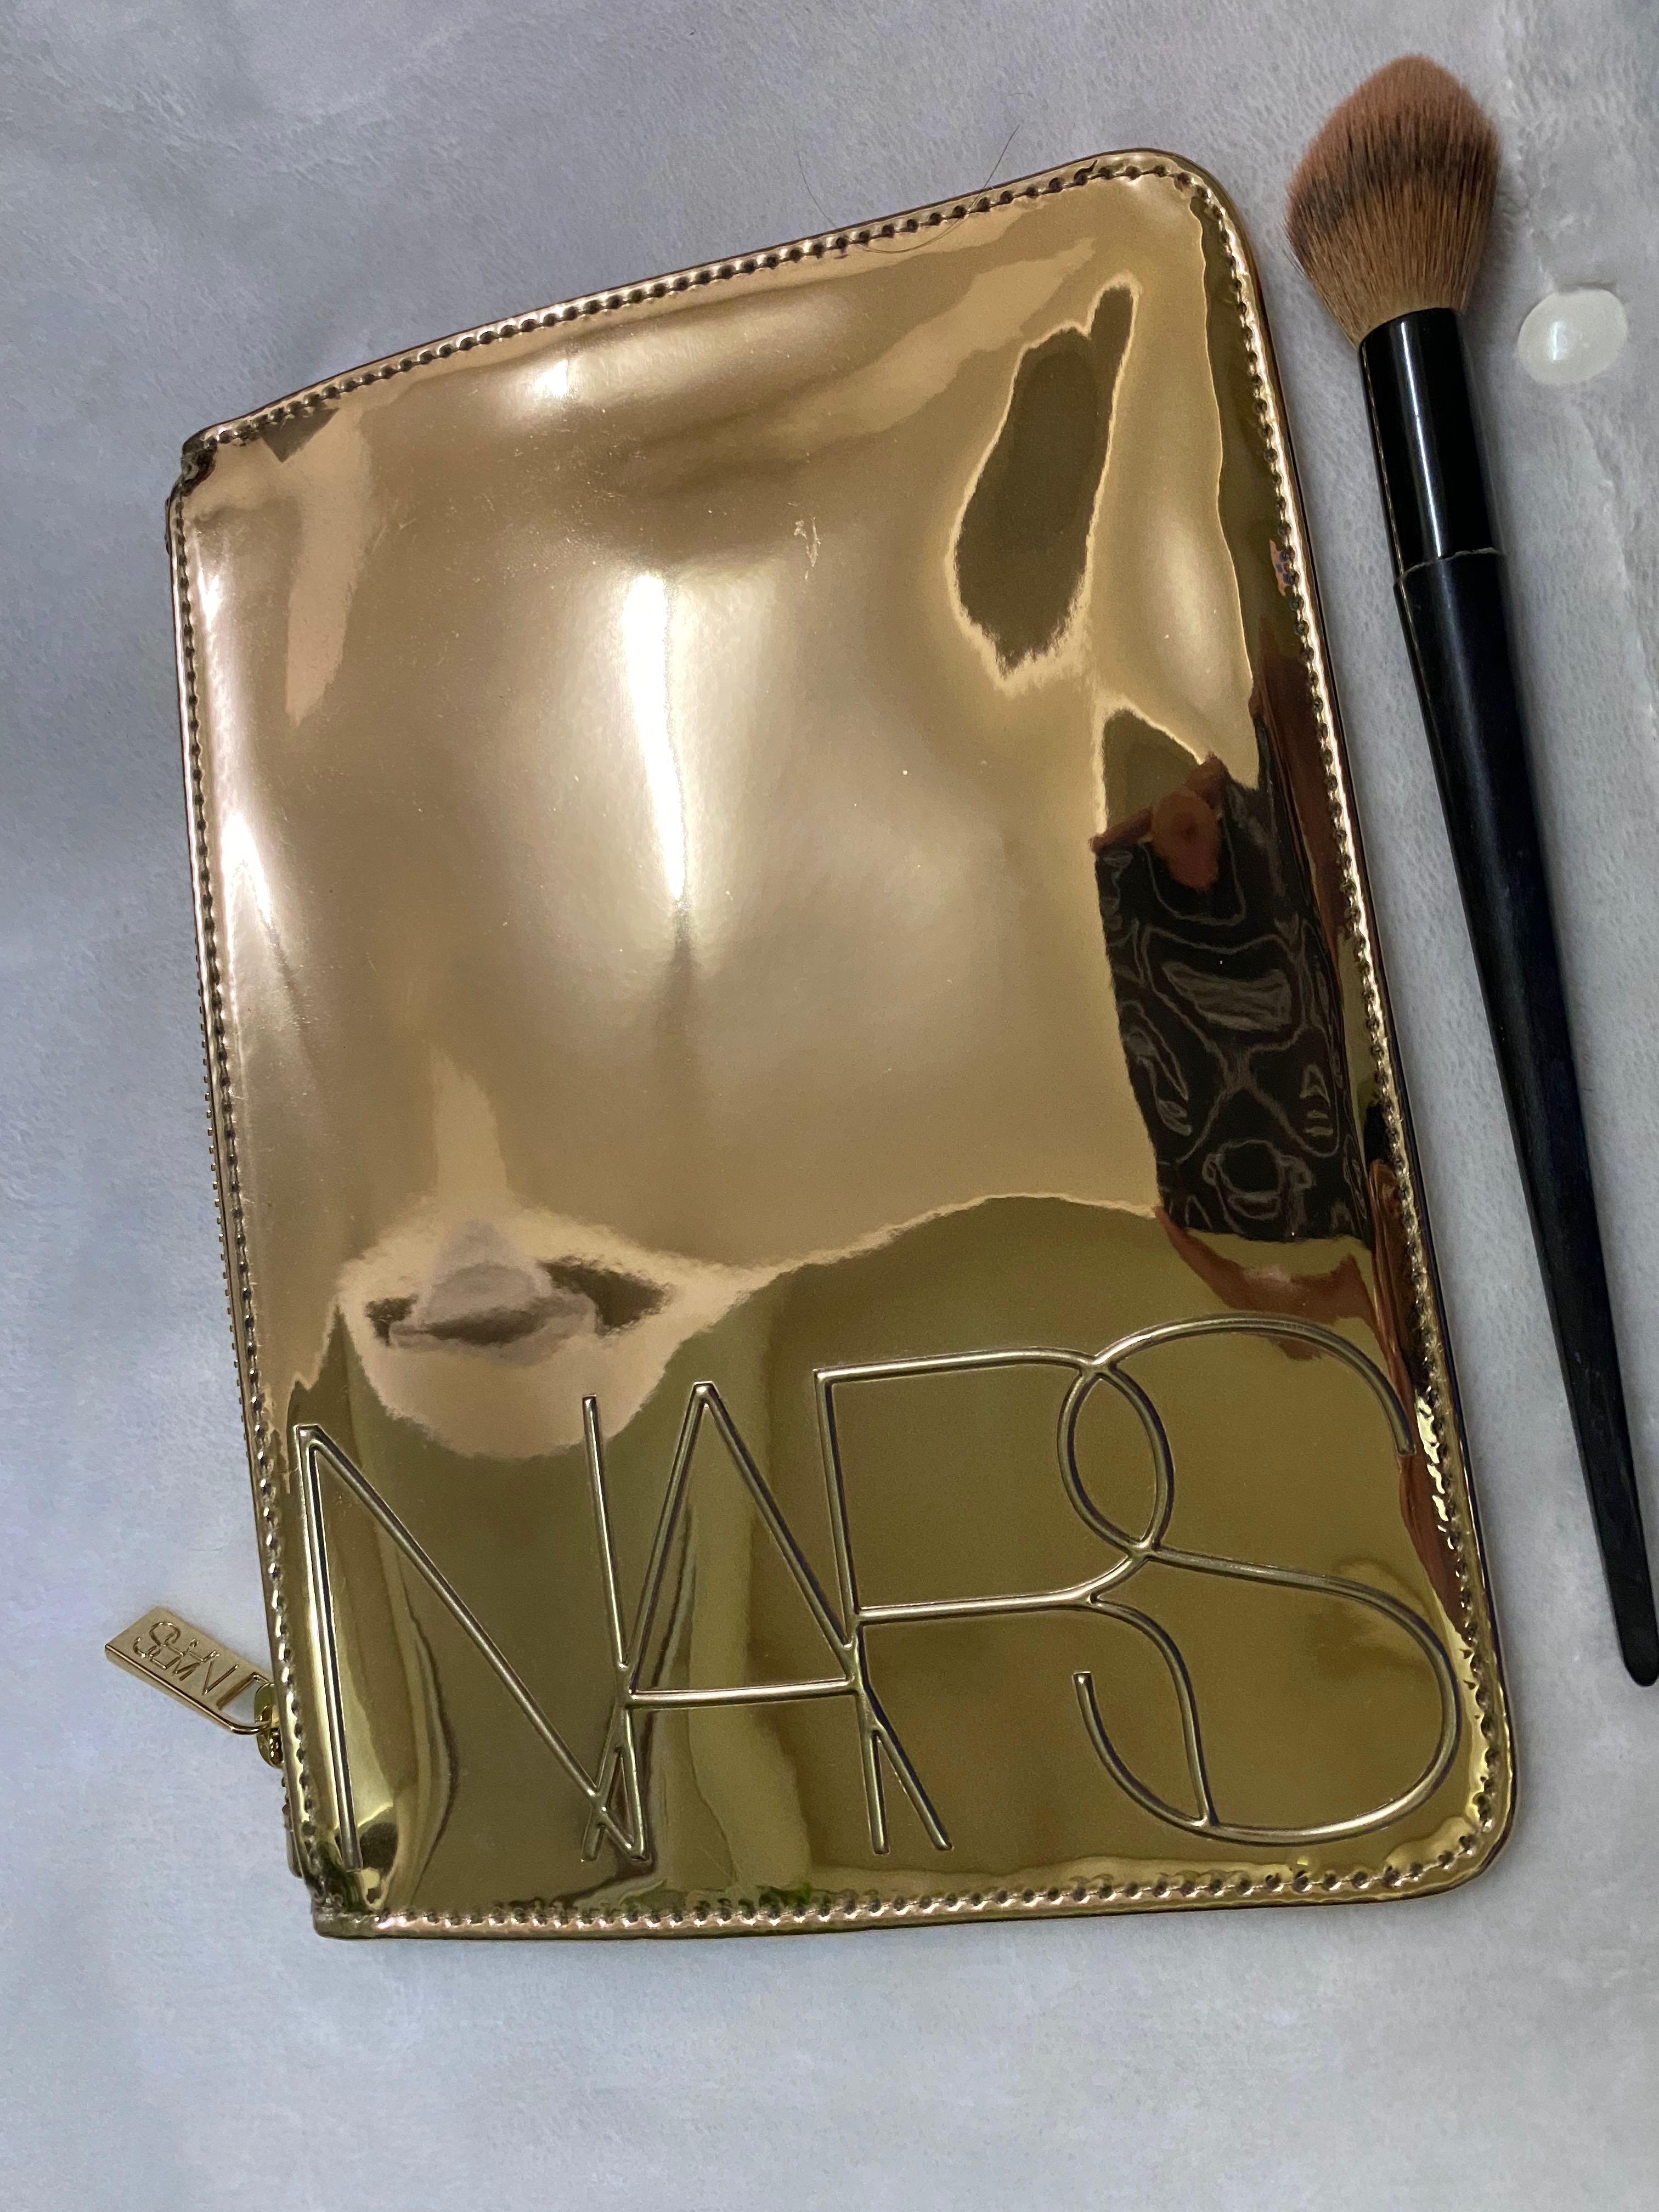 NARS Gold Make Up Bag 8x6 | Gold make up bag, Makeup bag, Nars